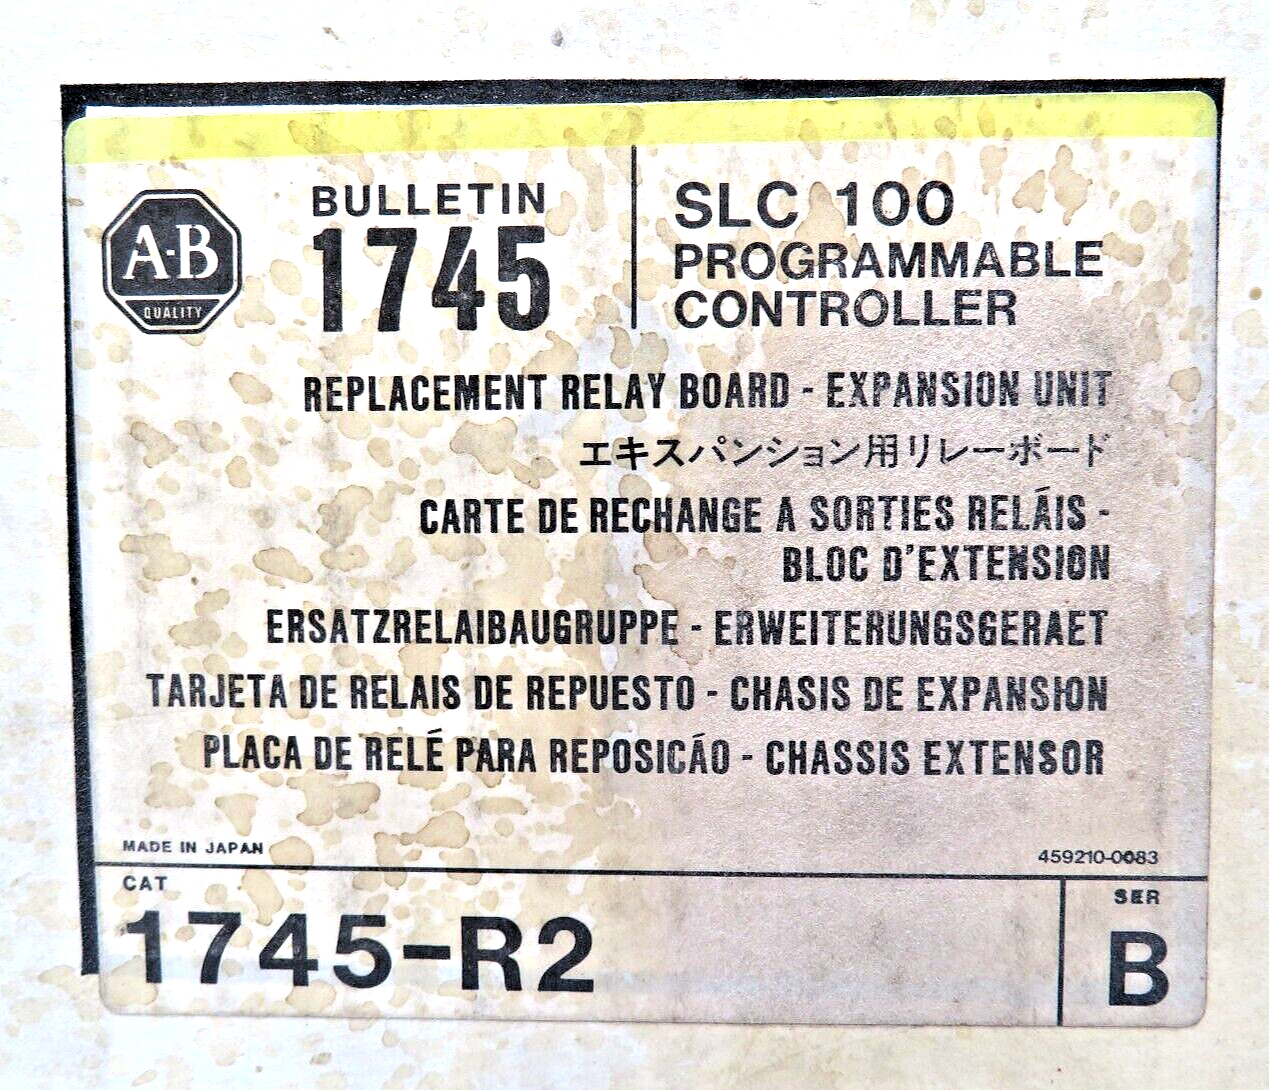 Allen-Bradley 1745-R2 SLC 100 Replacement Relay Board - Expansion Unit Series B